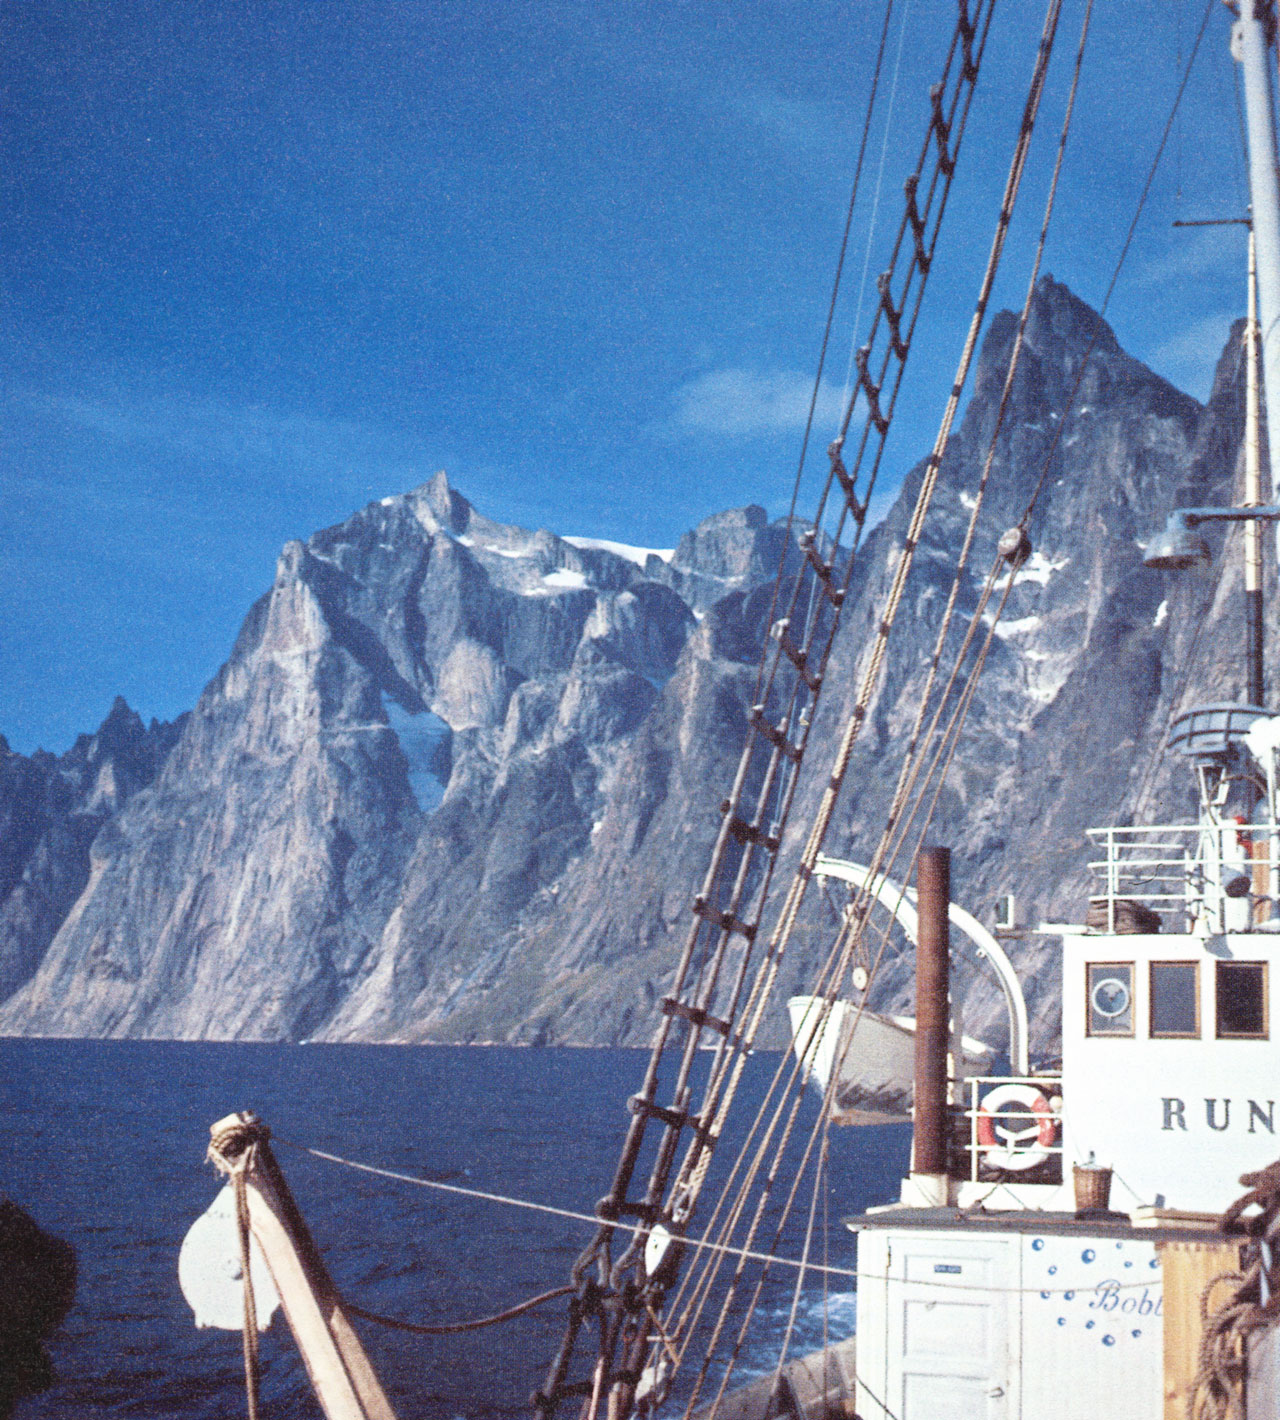 The Rundøy passing through Prince Christian Sound